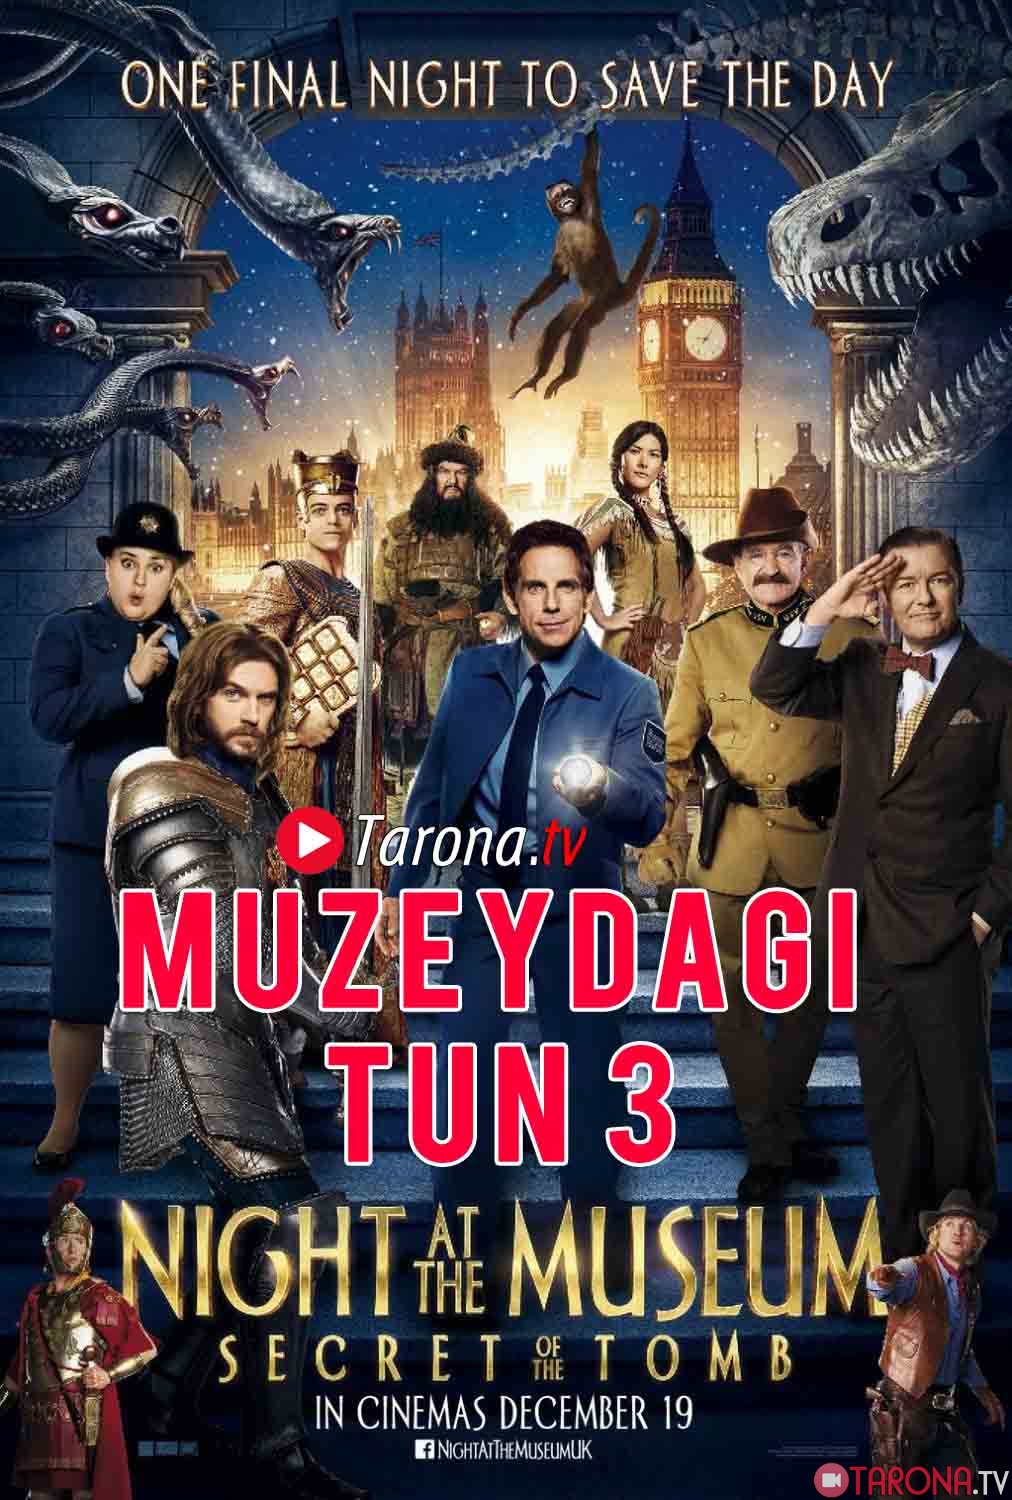 Muzeydagi Tun 3 / Ночь в музее 3 (Uzbek tilida) 2014